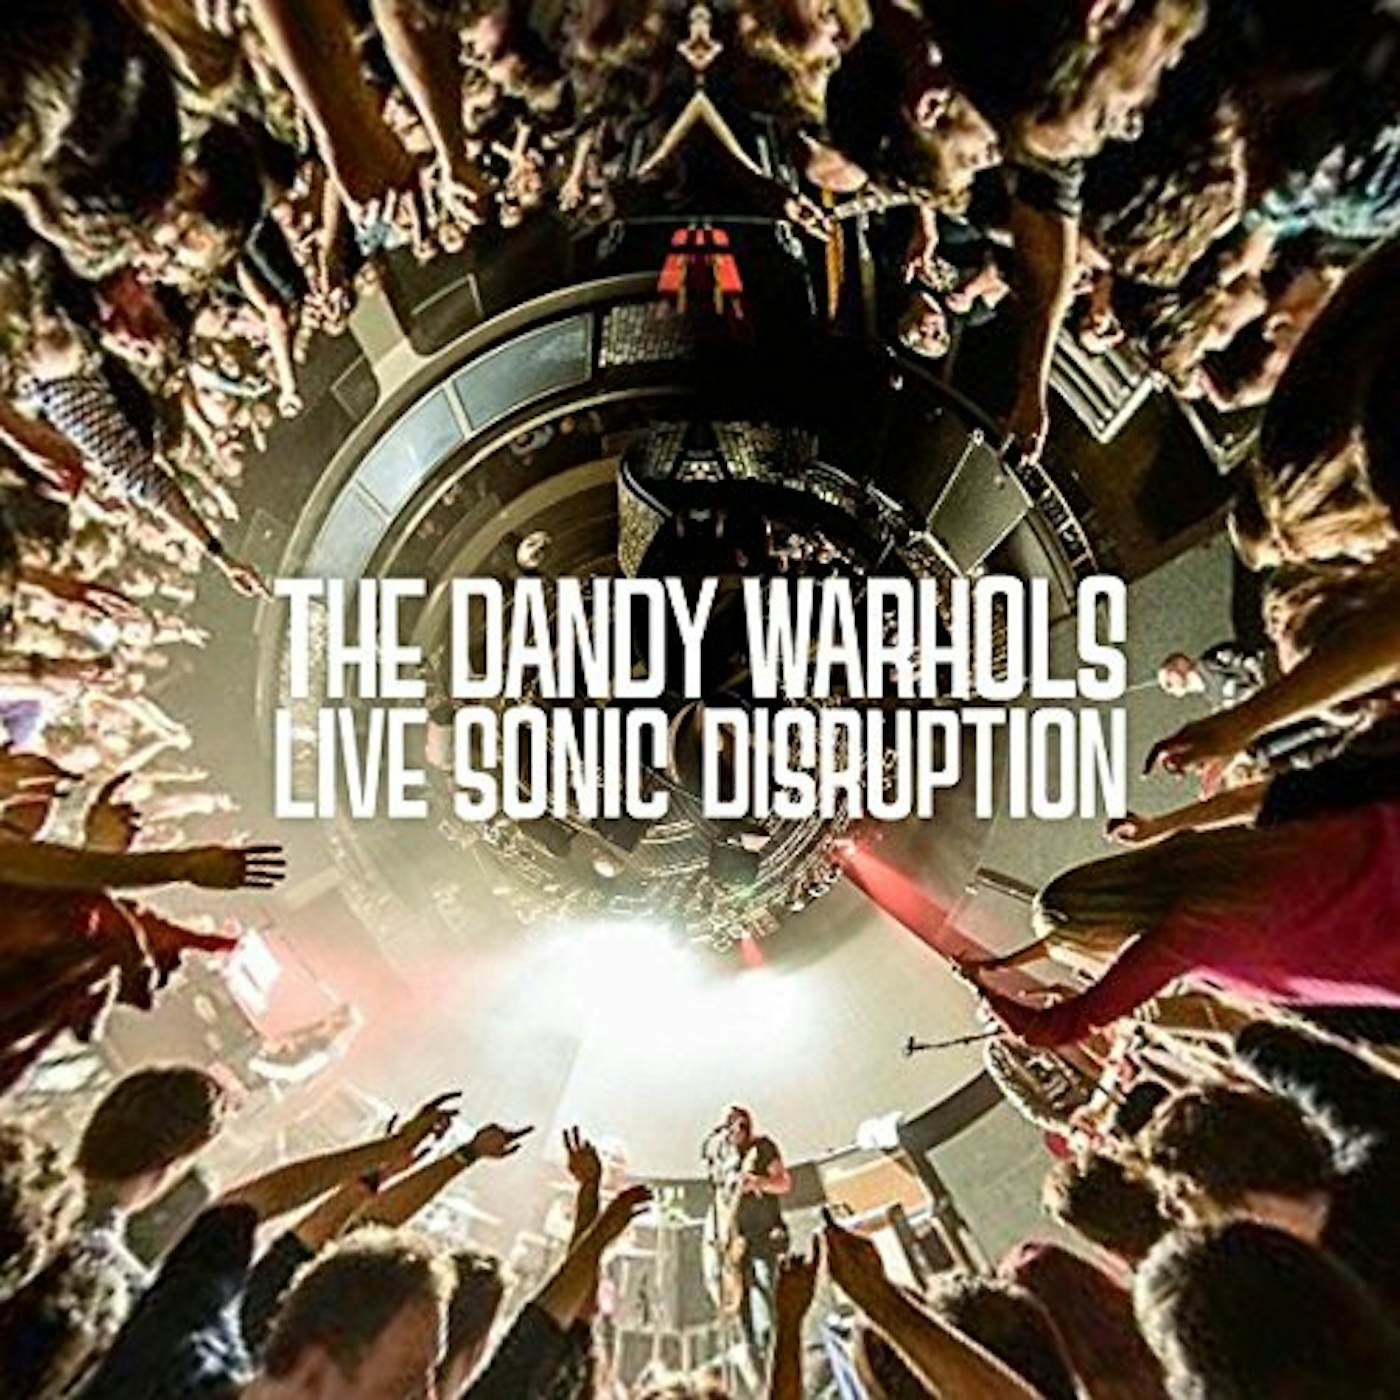 The Dandy Warhols Live Sonic Disruption Vinyl Record